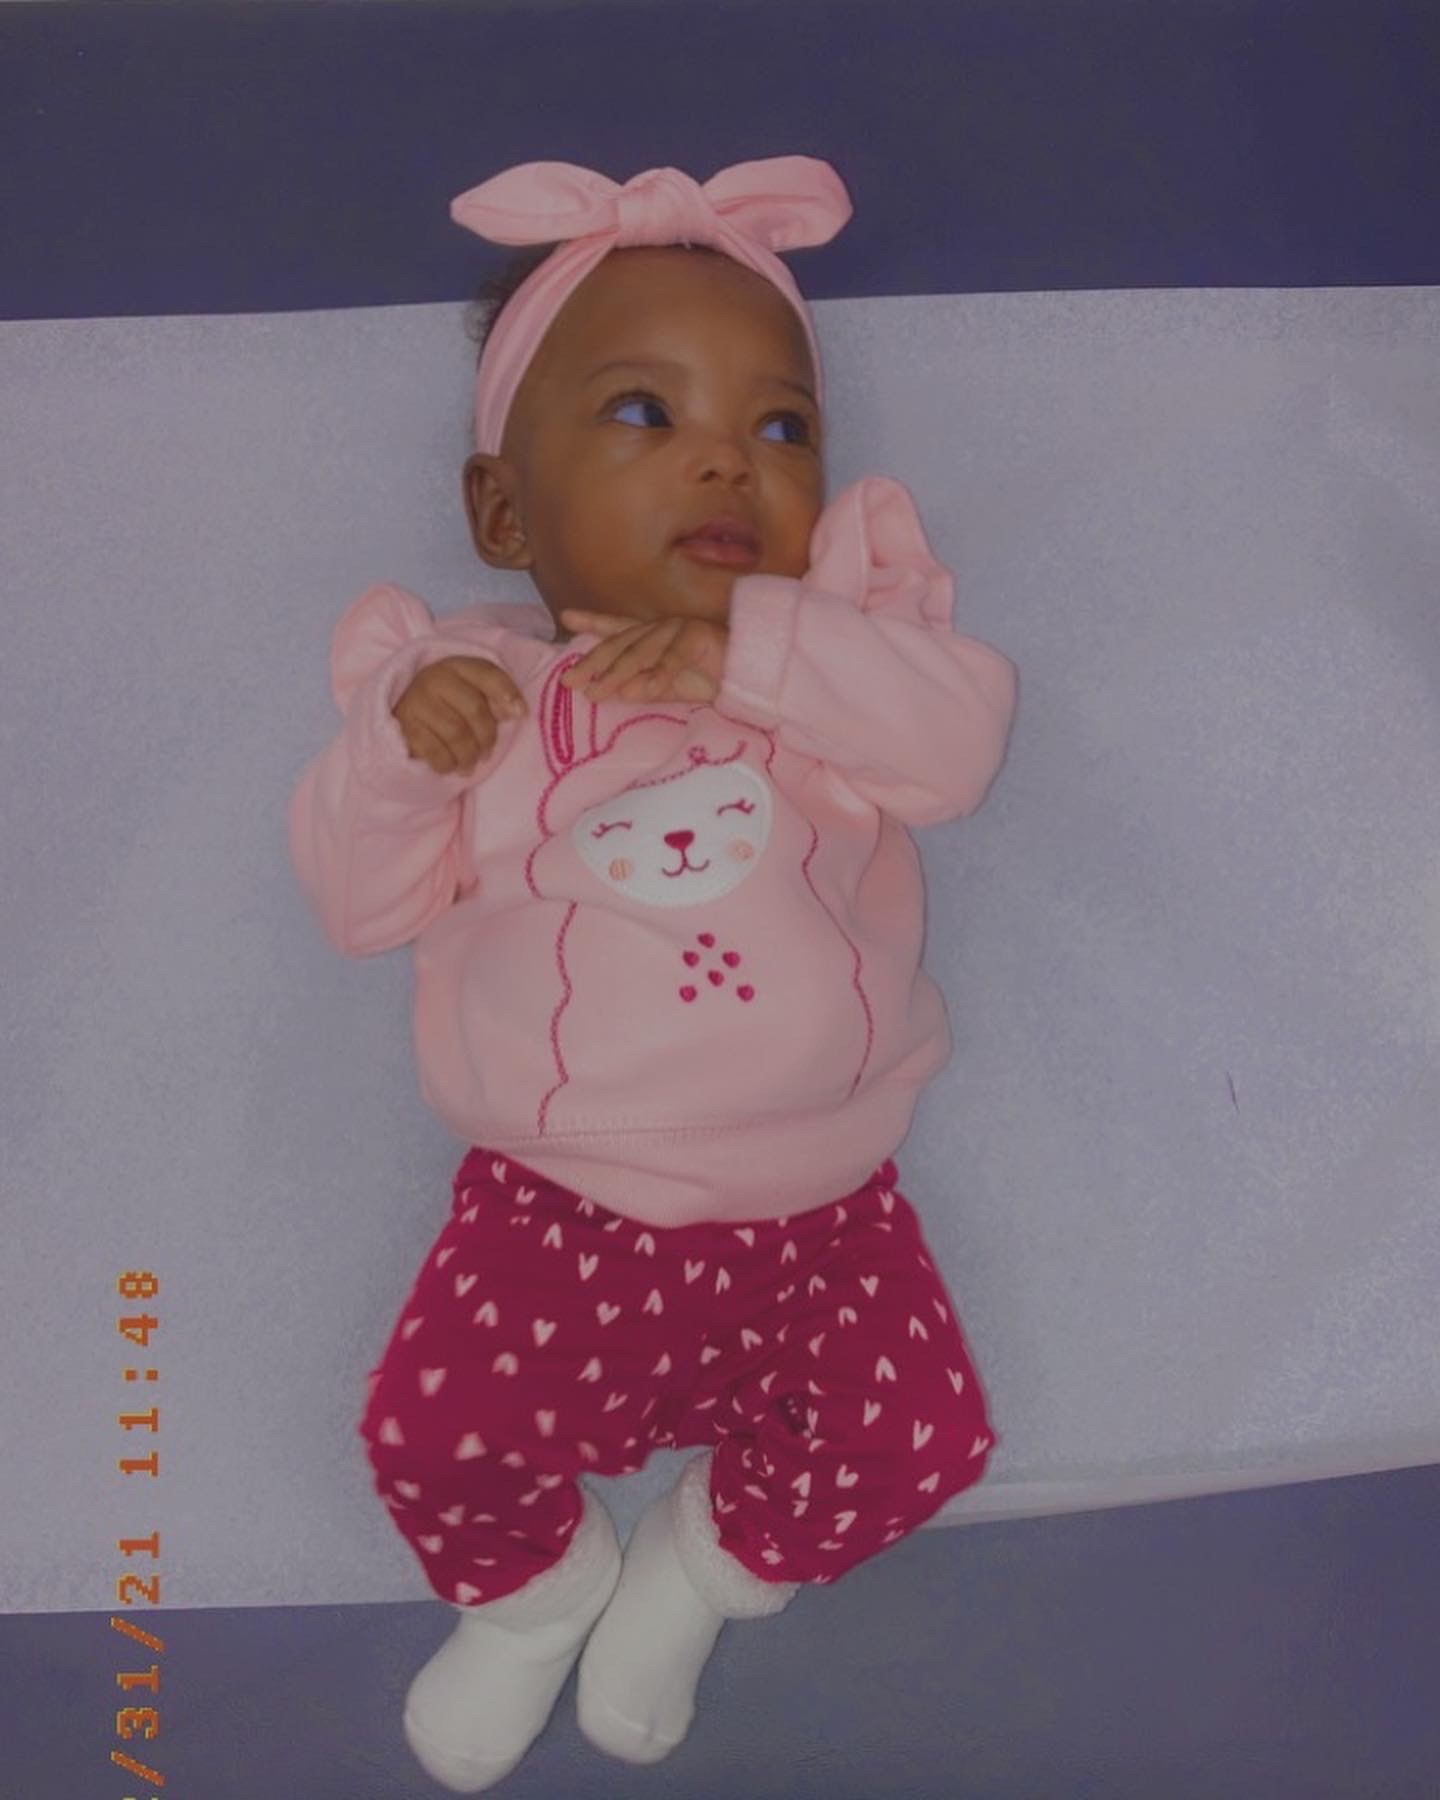 Aubri Myles as a baby